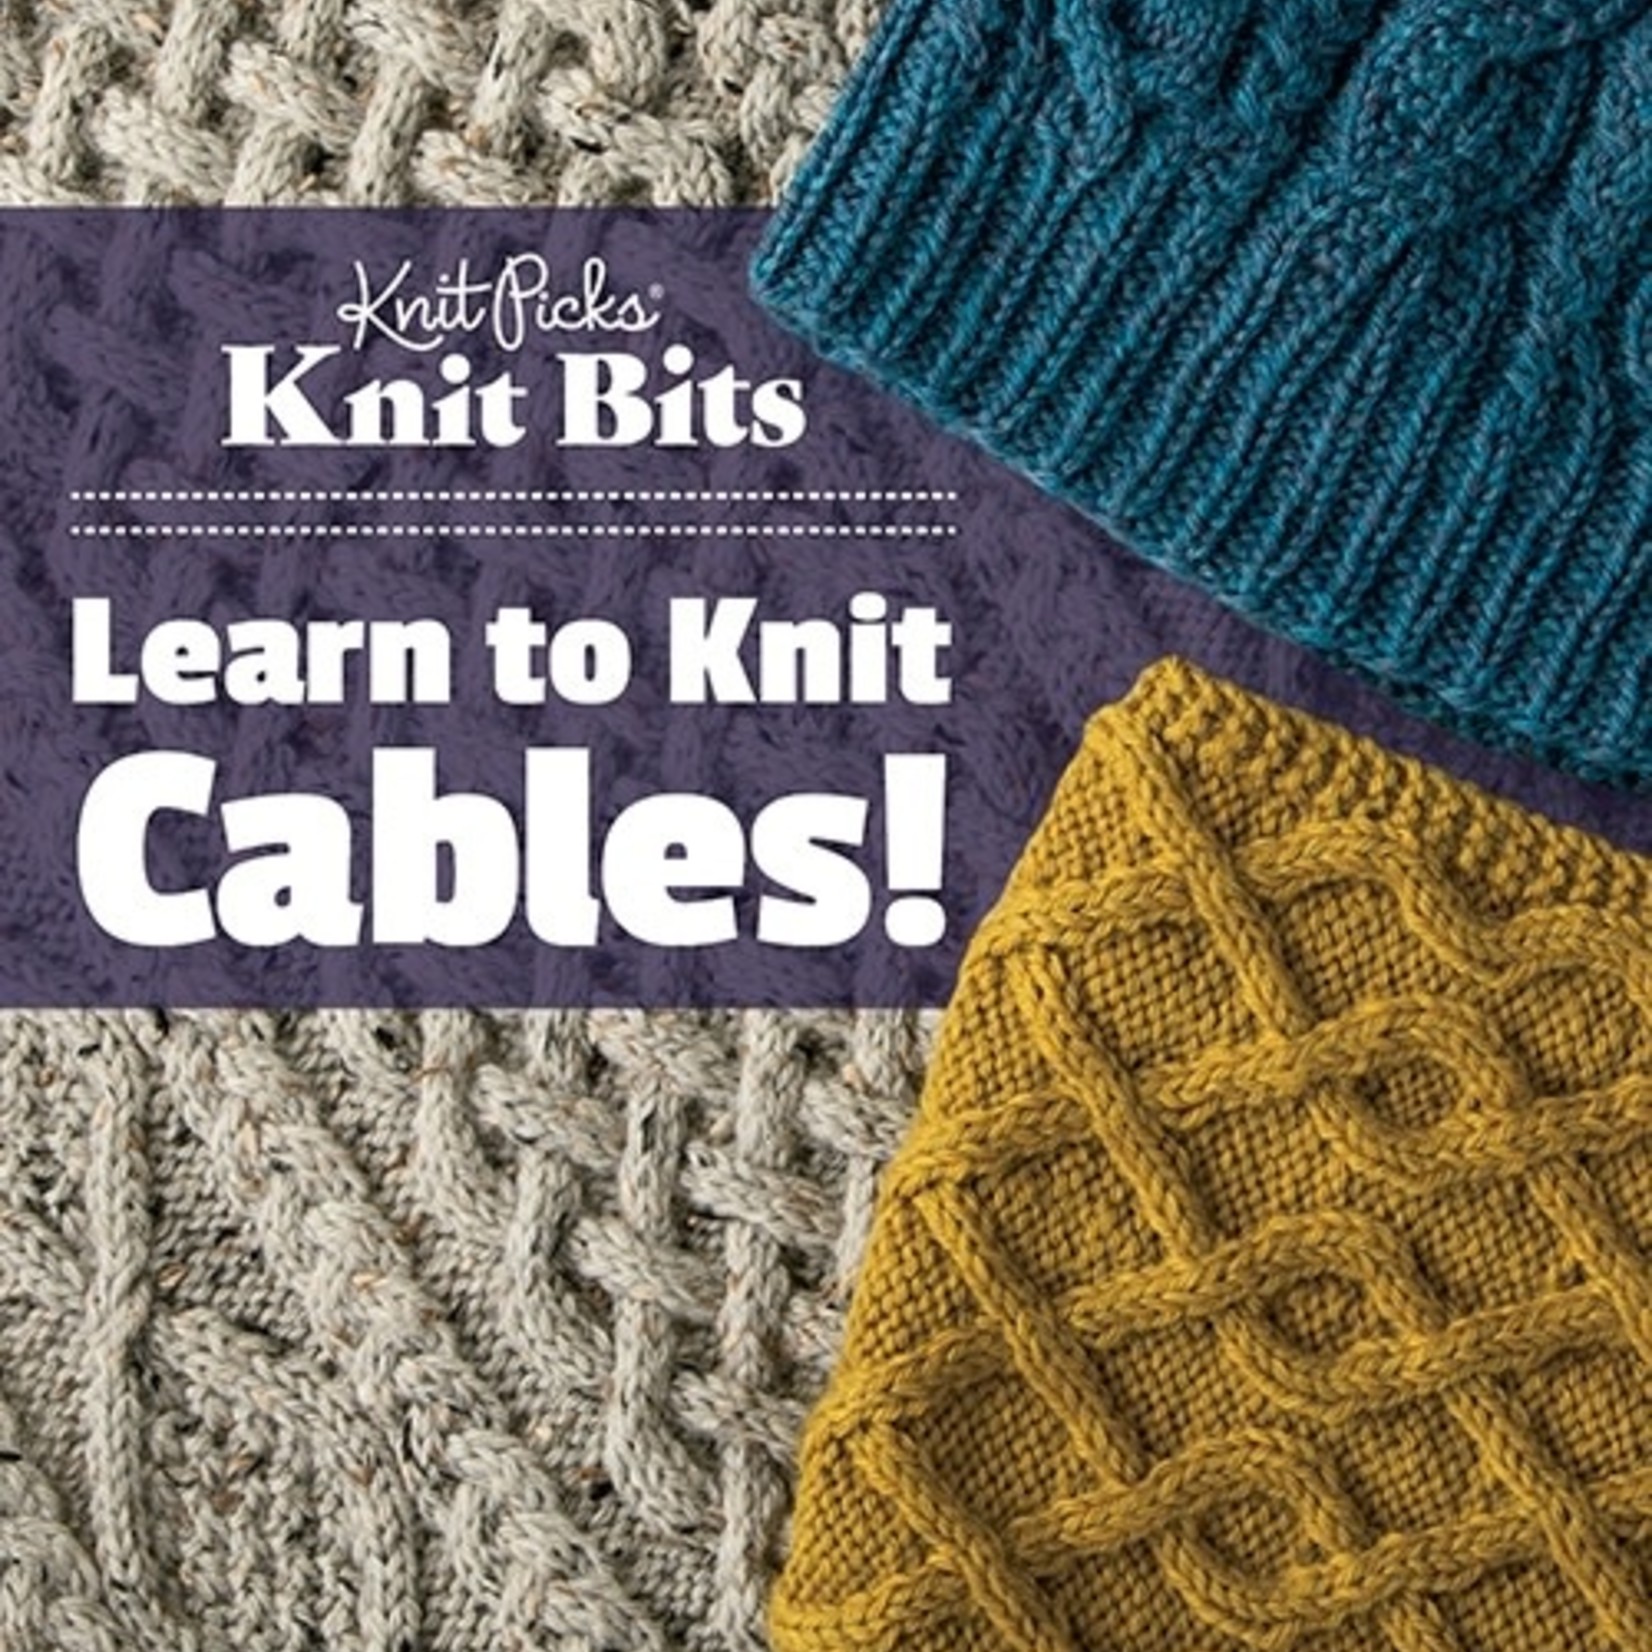 Knit Picks Knit Bits: Learn to Knit Cables! by KNIT PICKS